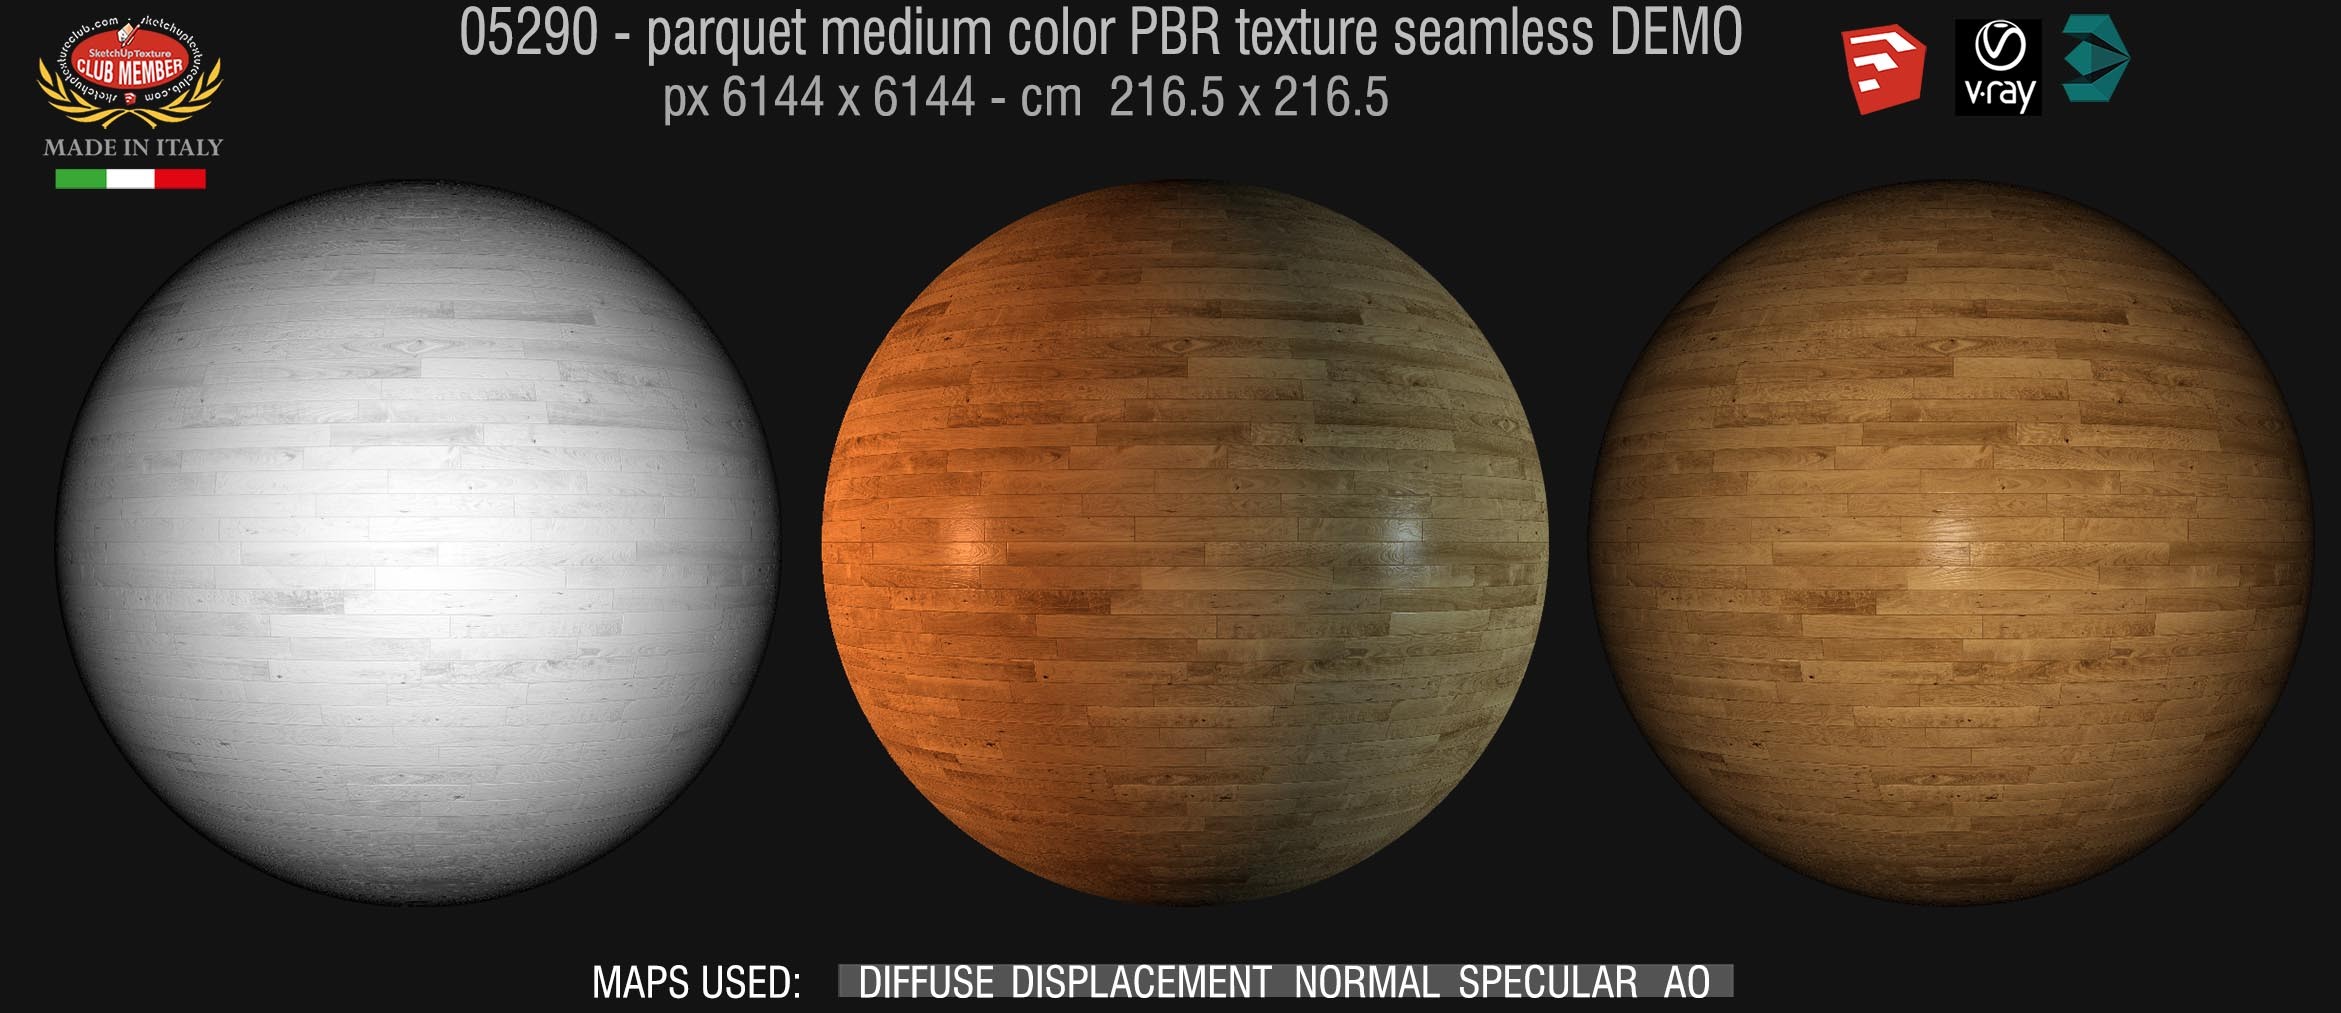 05290 parquet medium color PBR texture seamless DEMO